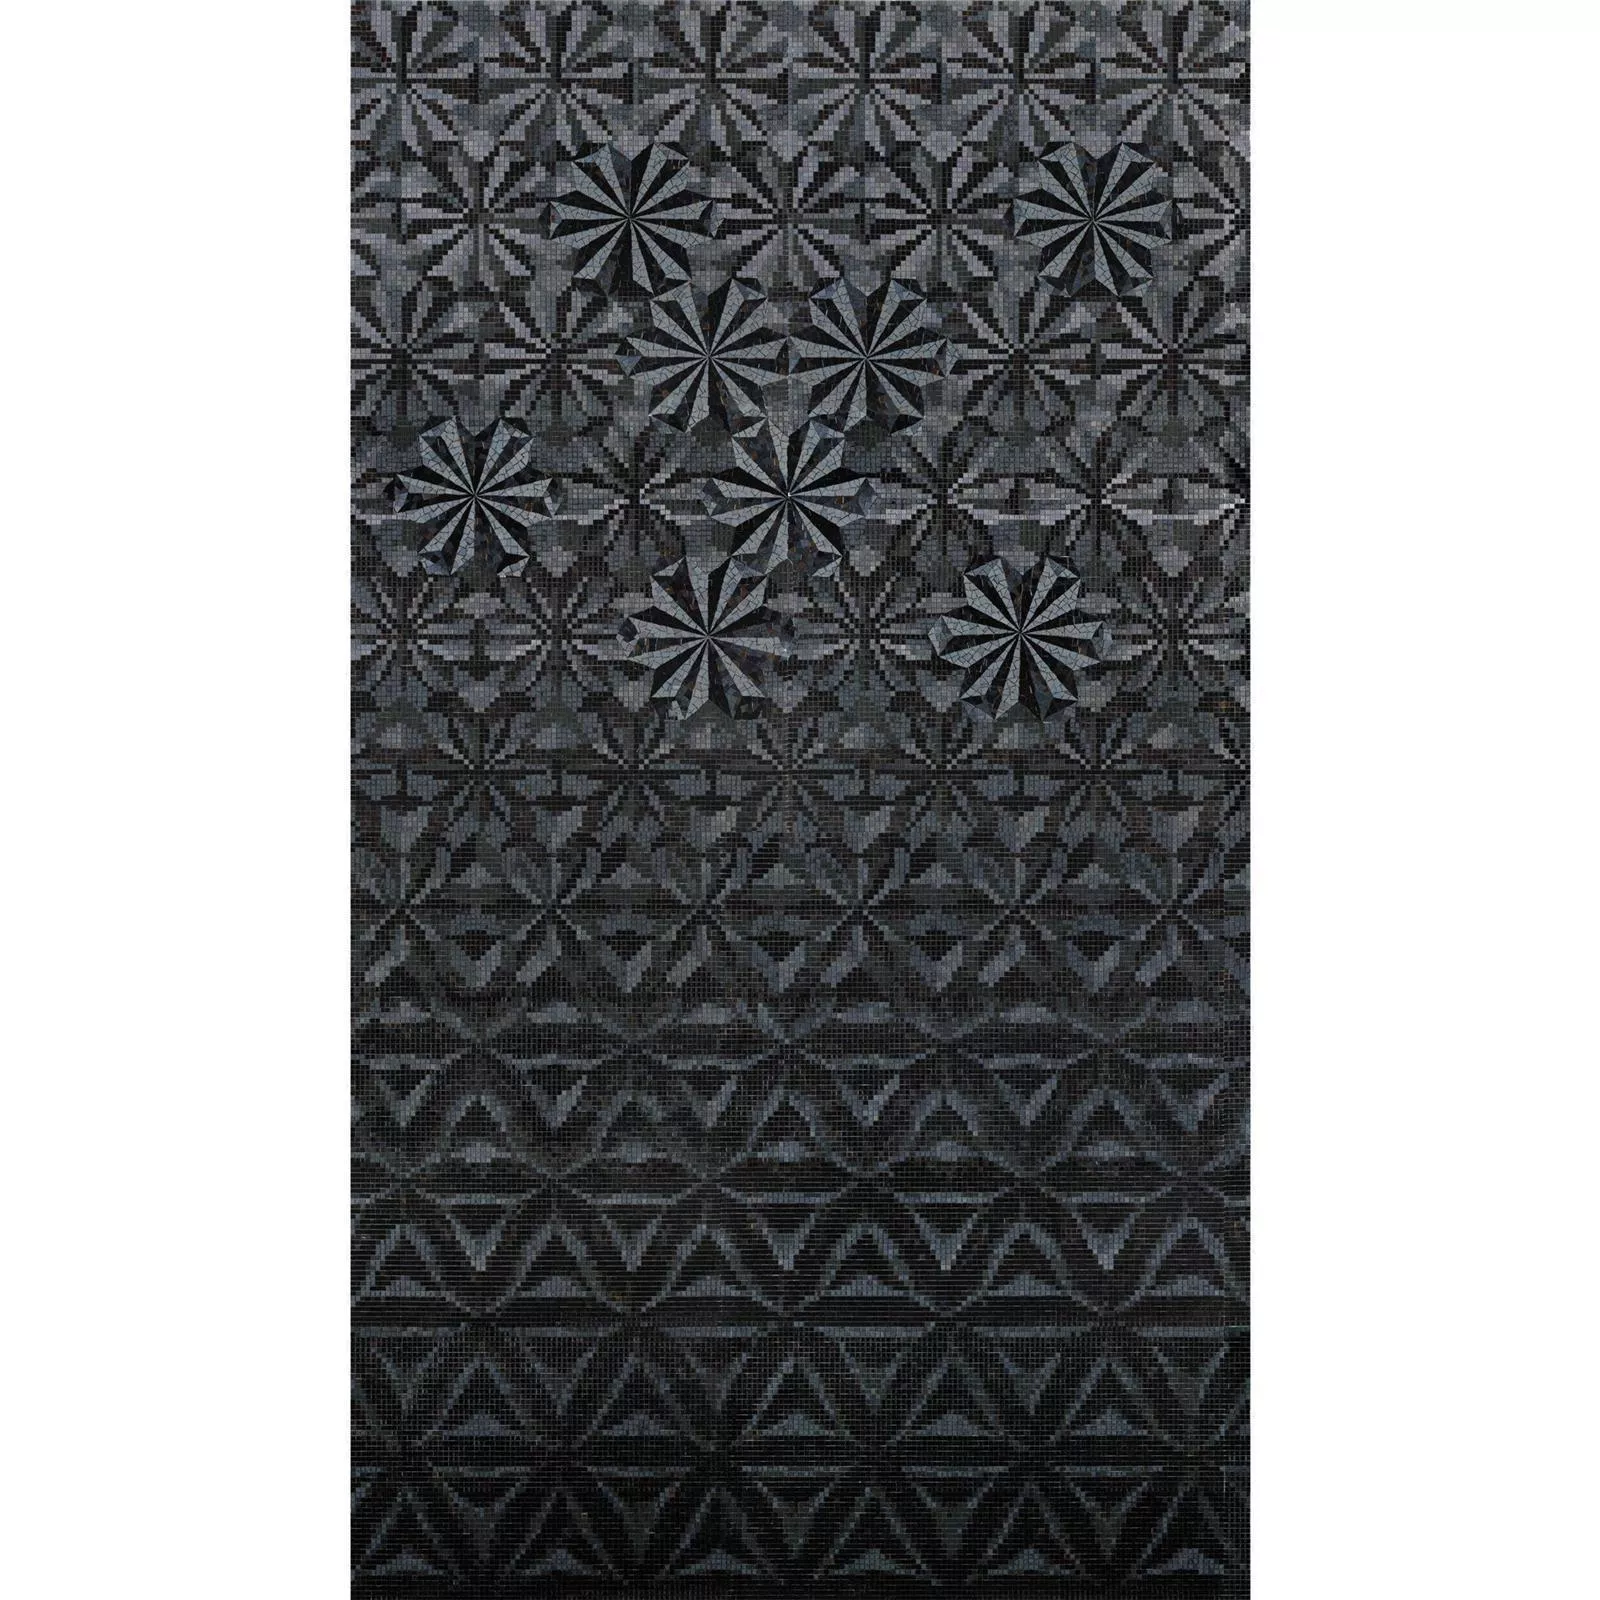 Mozaic De Sticlă Imagine Magicflower Black 170,7x300,3cm